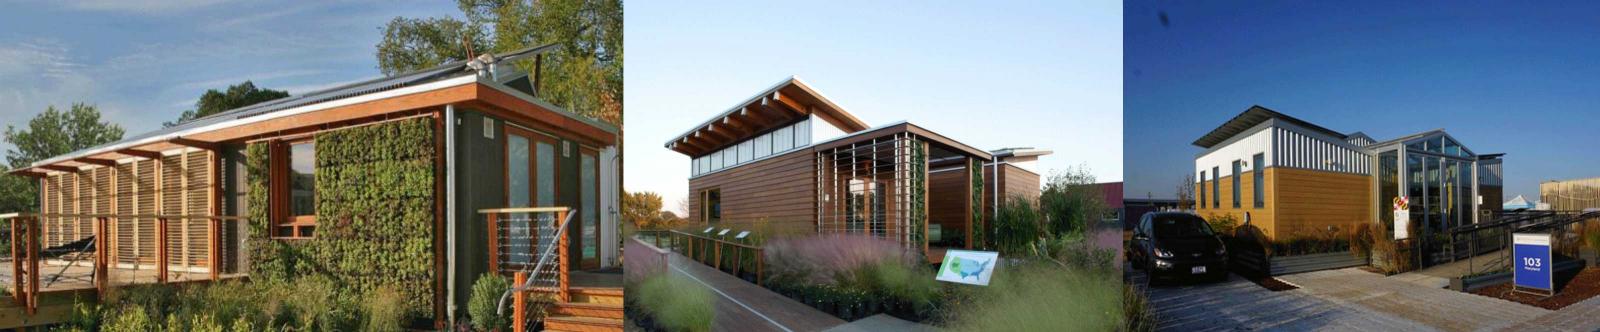 Solar Decathlon house project wins